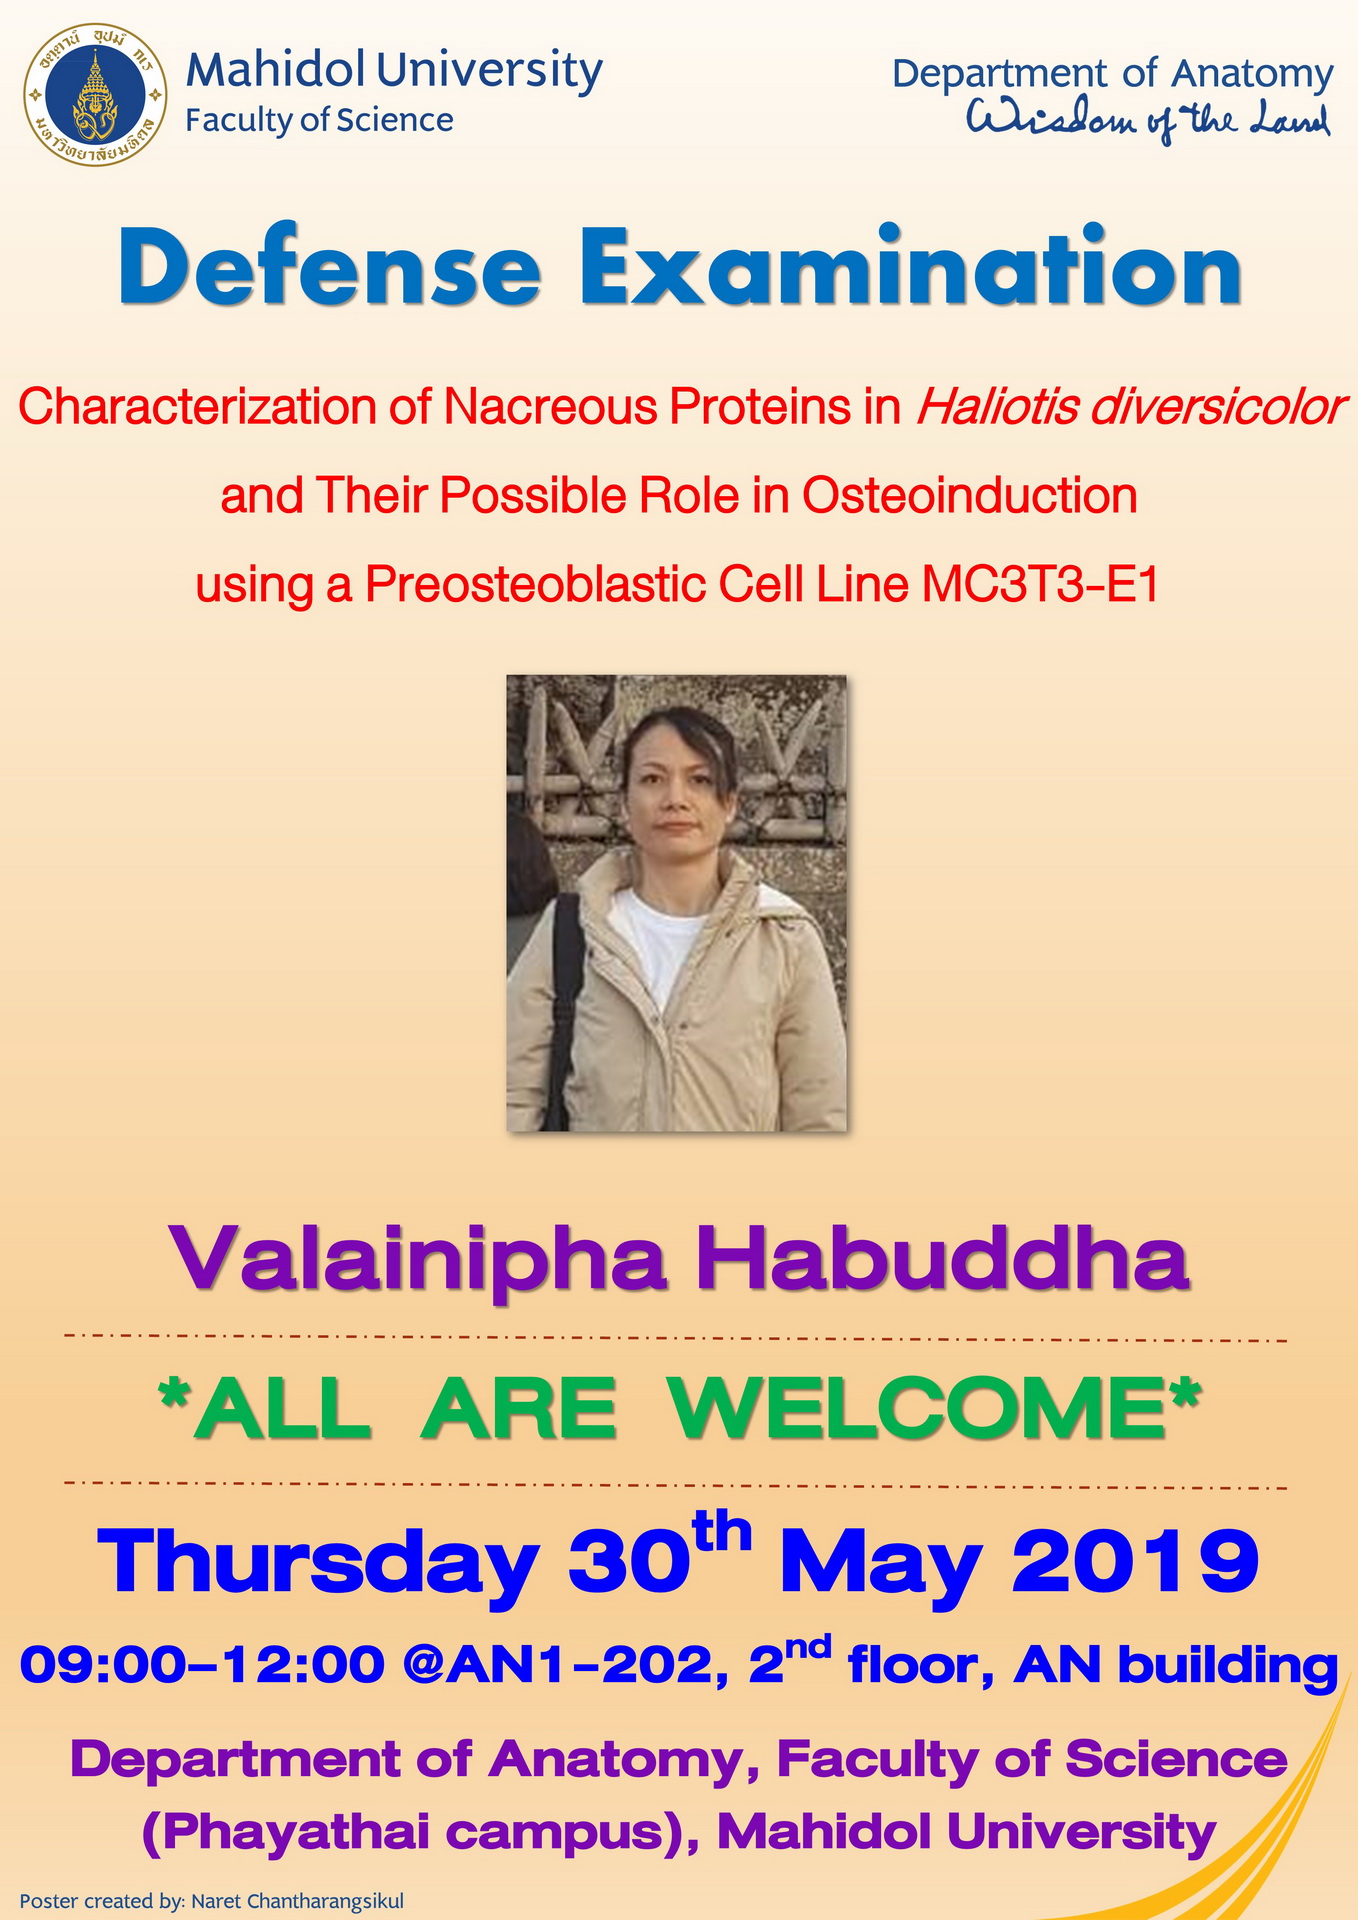 Valainipha's DEFENSE on Thursday 30th May 2019, 09:00-12:00, @AN1-202